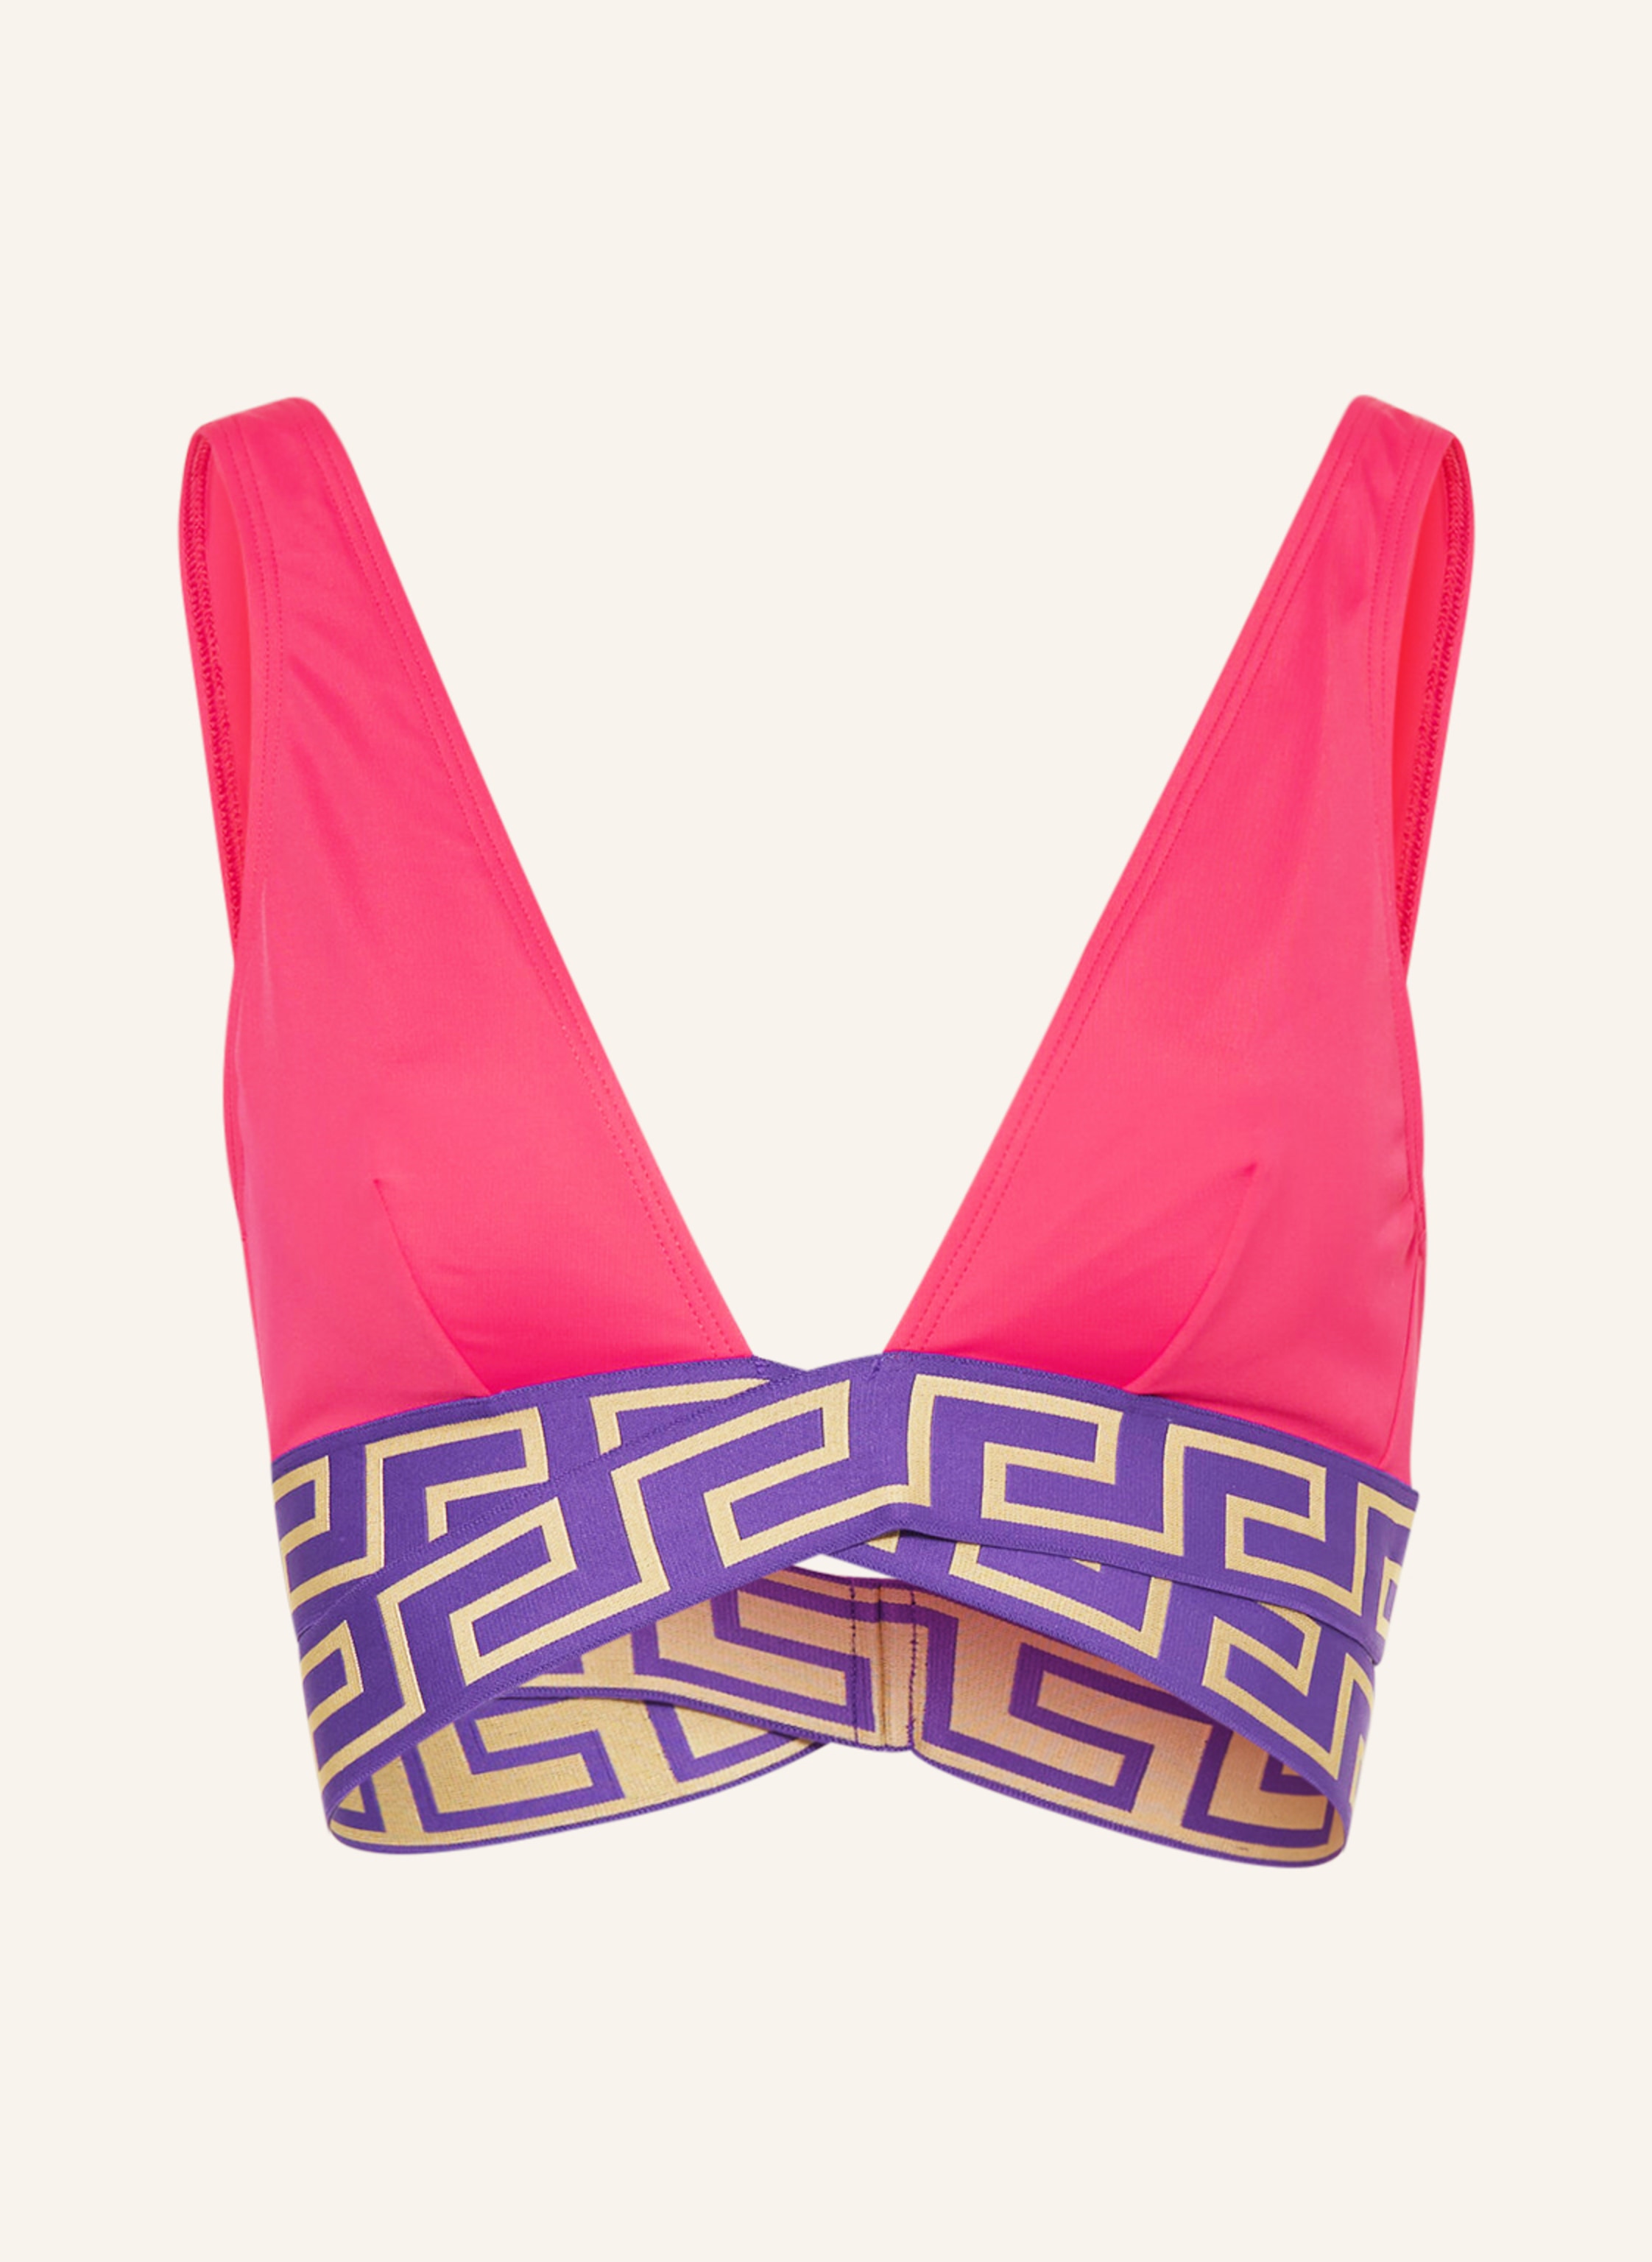 VERSACE Bralette bikini top in neon pink/ purple